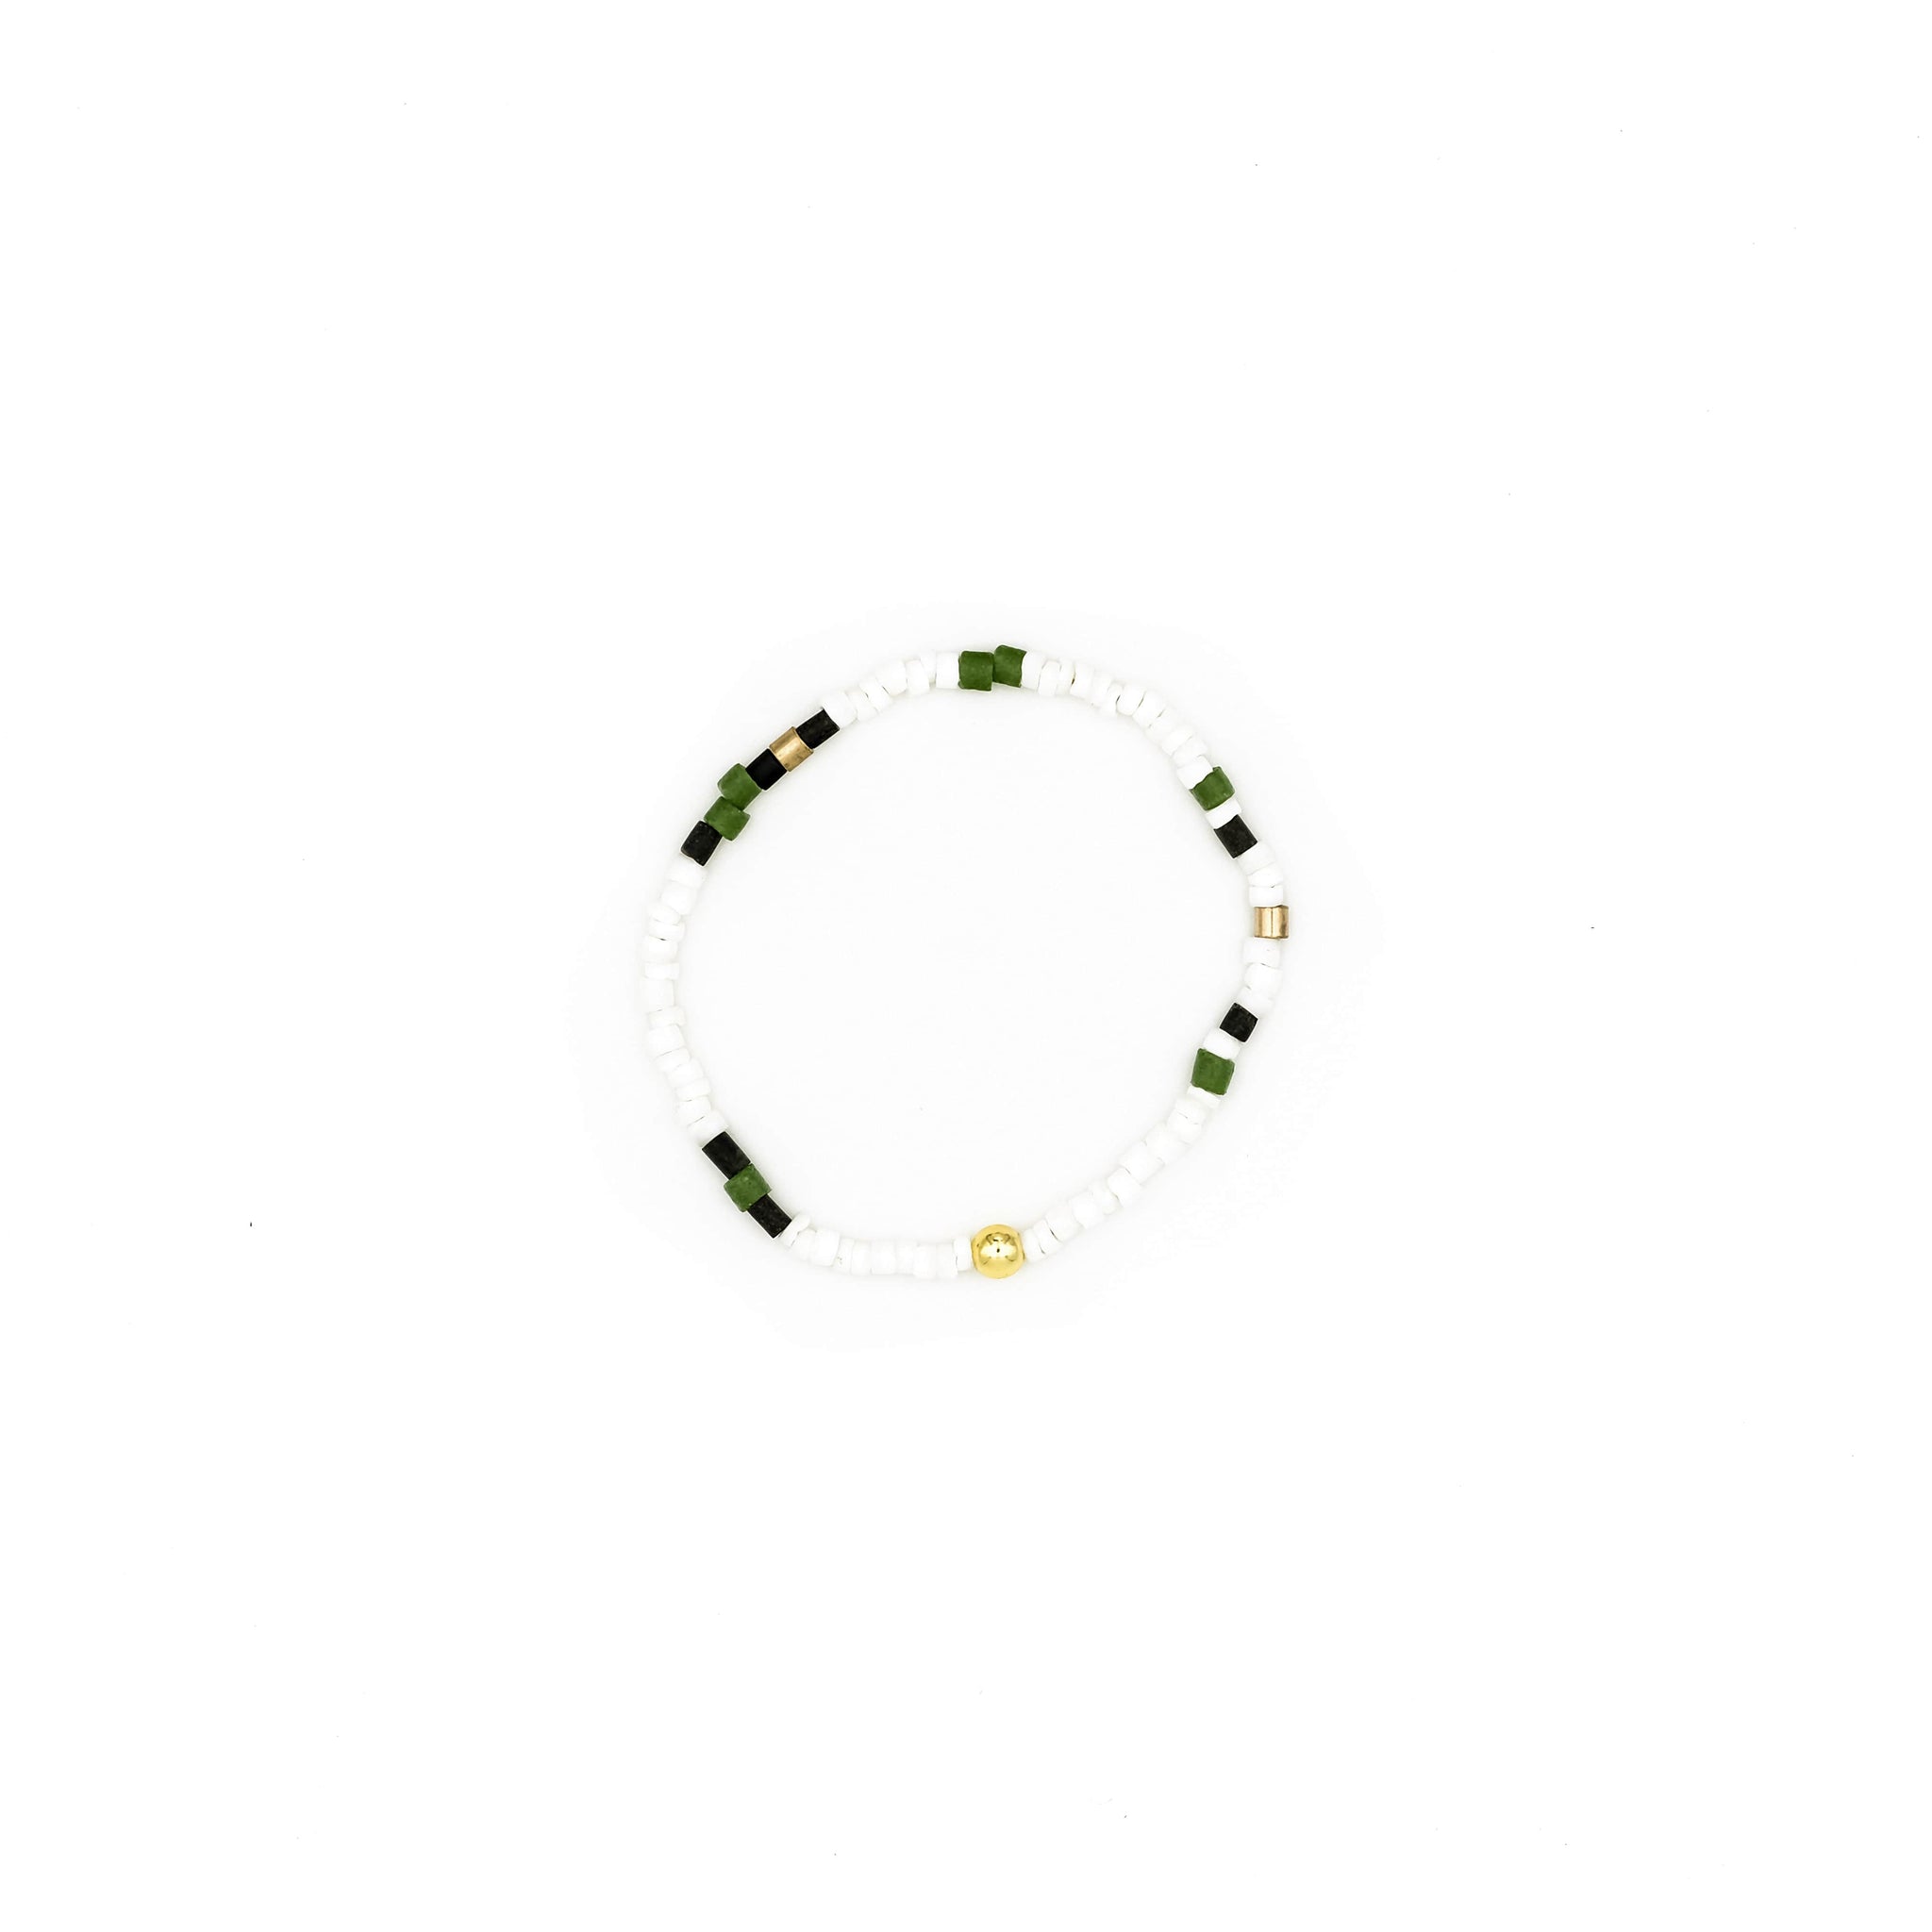 Handcrafted designer stone mini heishi stretch bracelet with black jade clam shell hematite beads - popvibe